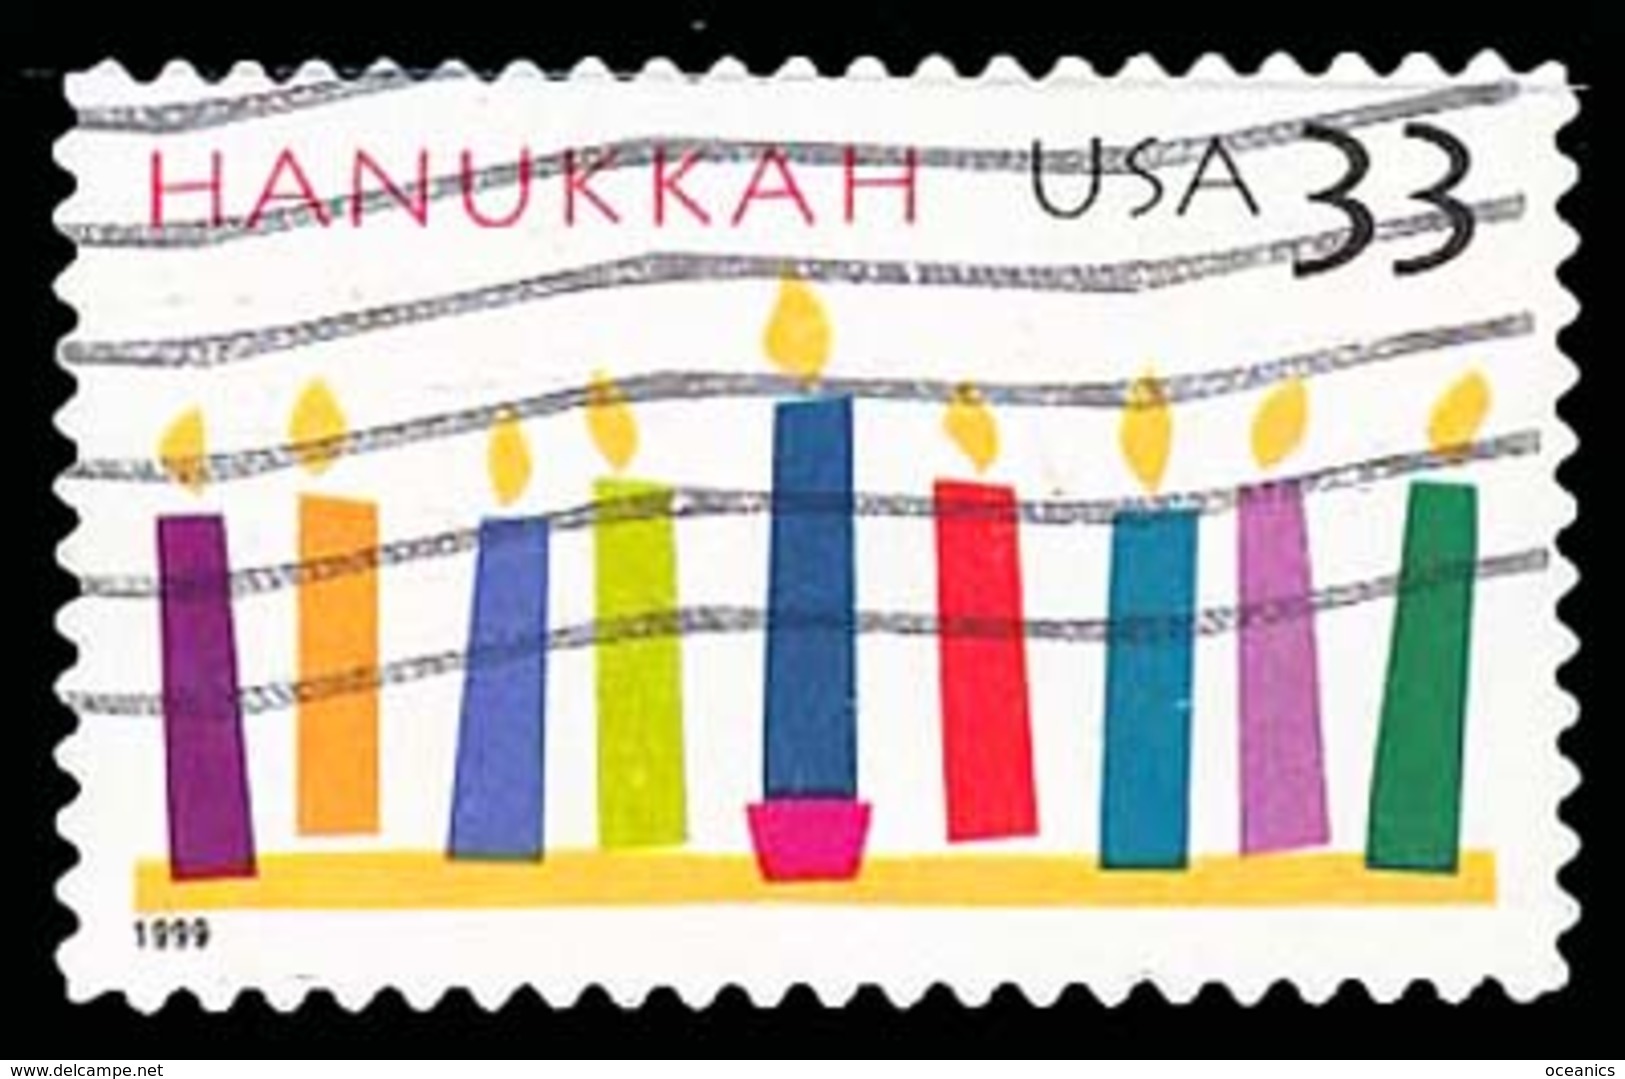 Etats-Unis / United States (Scott No.3352 - Hanukkah 33¢) (o) - Used Stamps